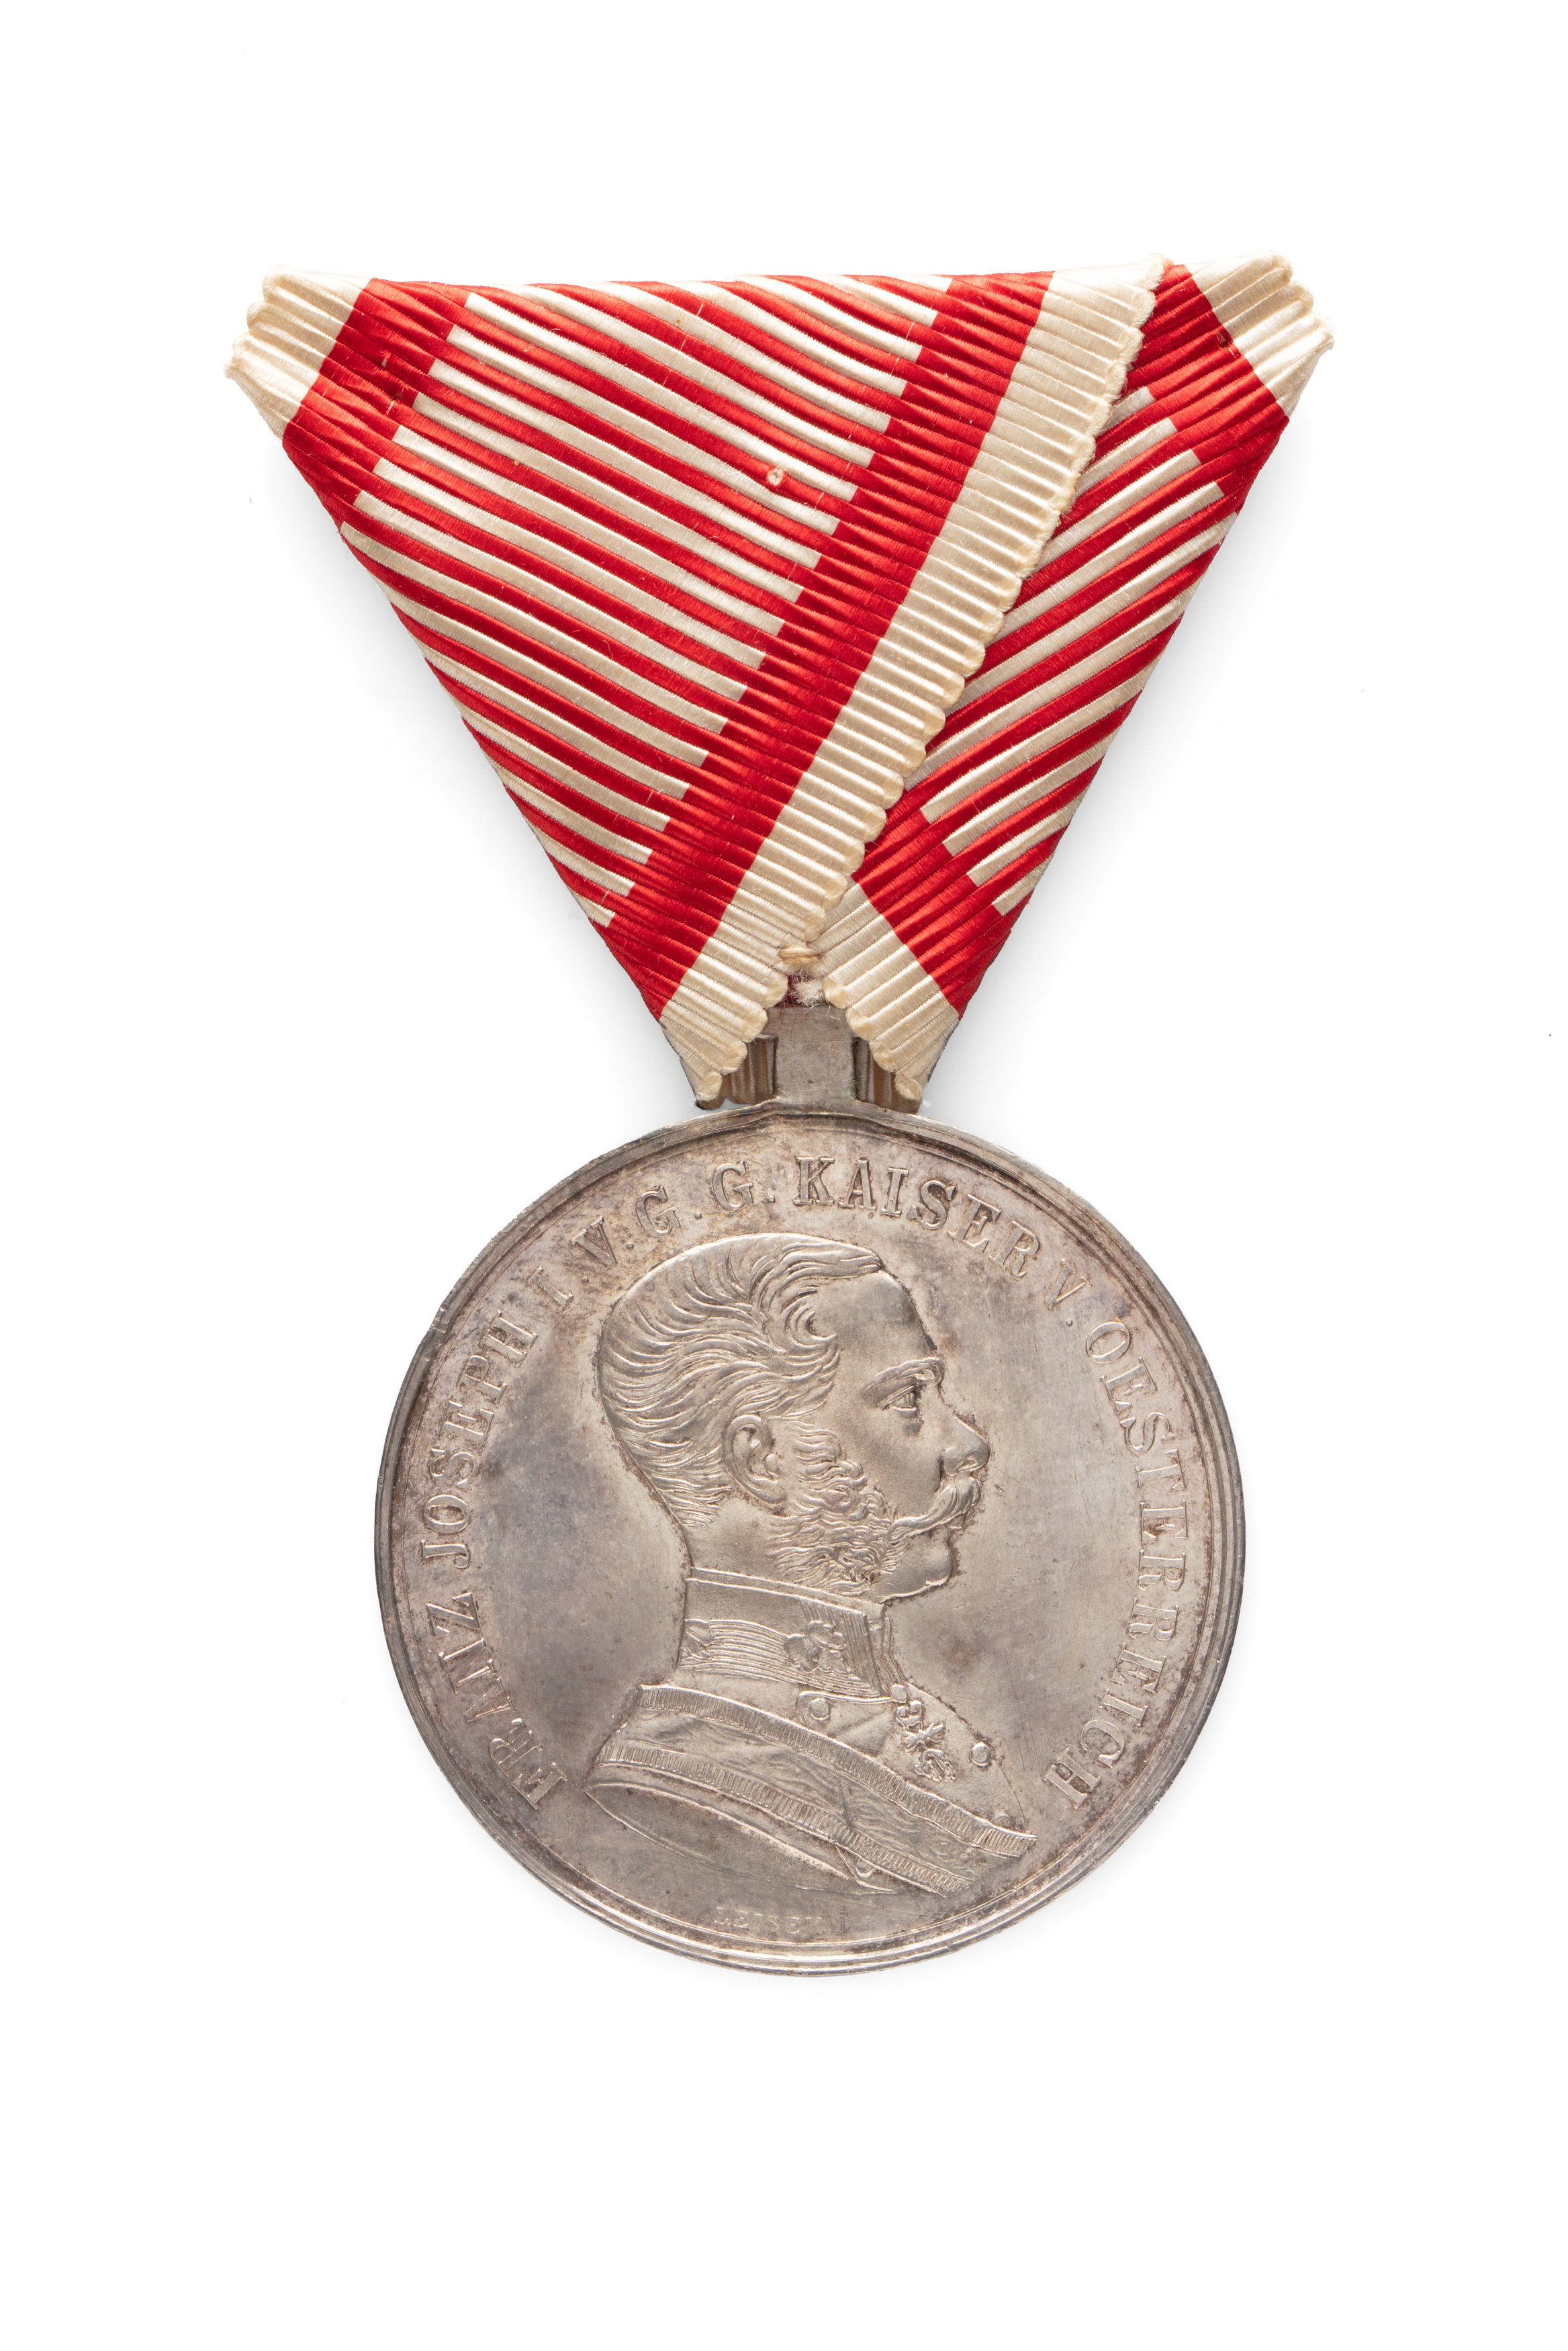 Austrian military medal awarded for valour